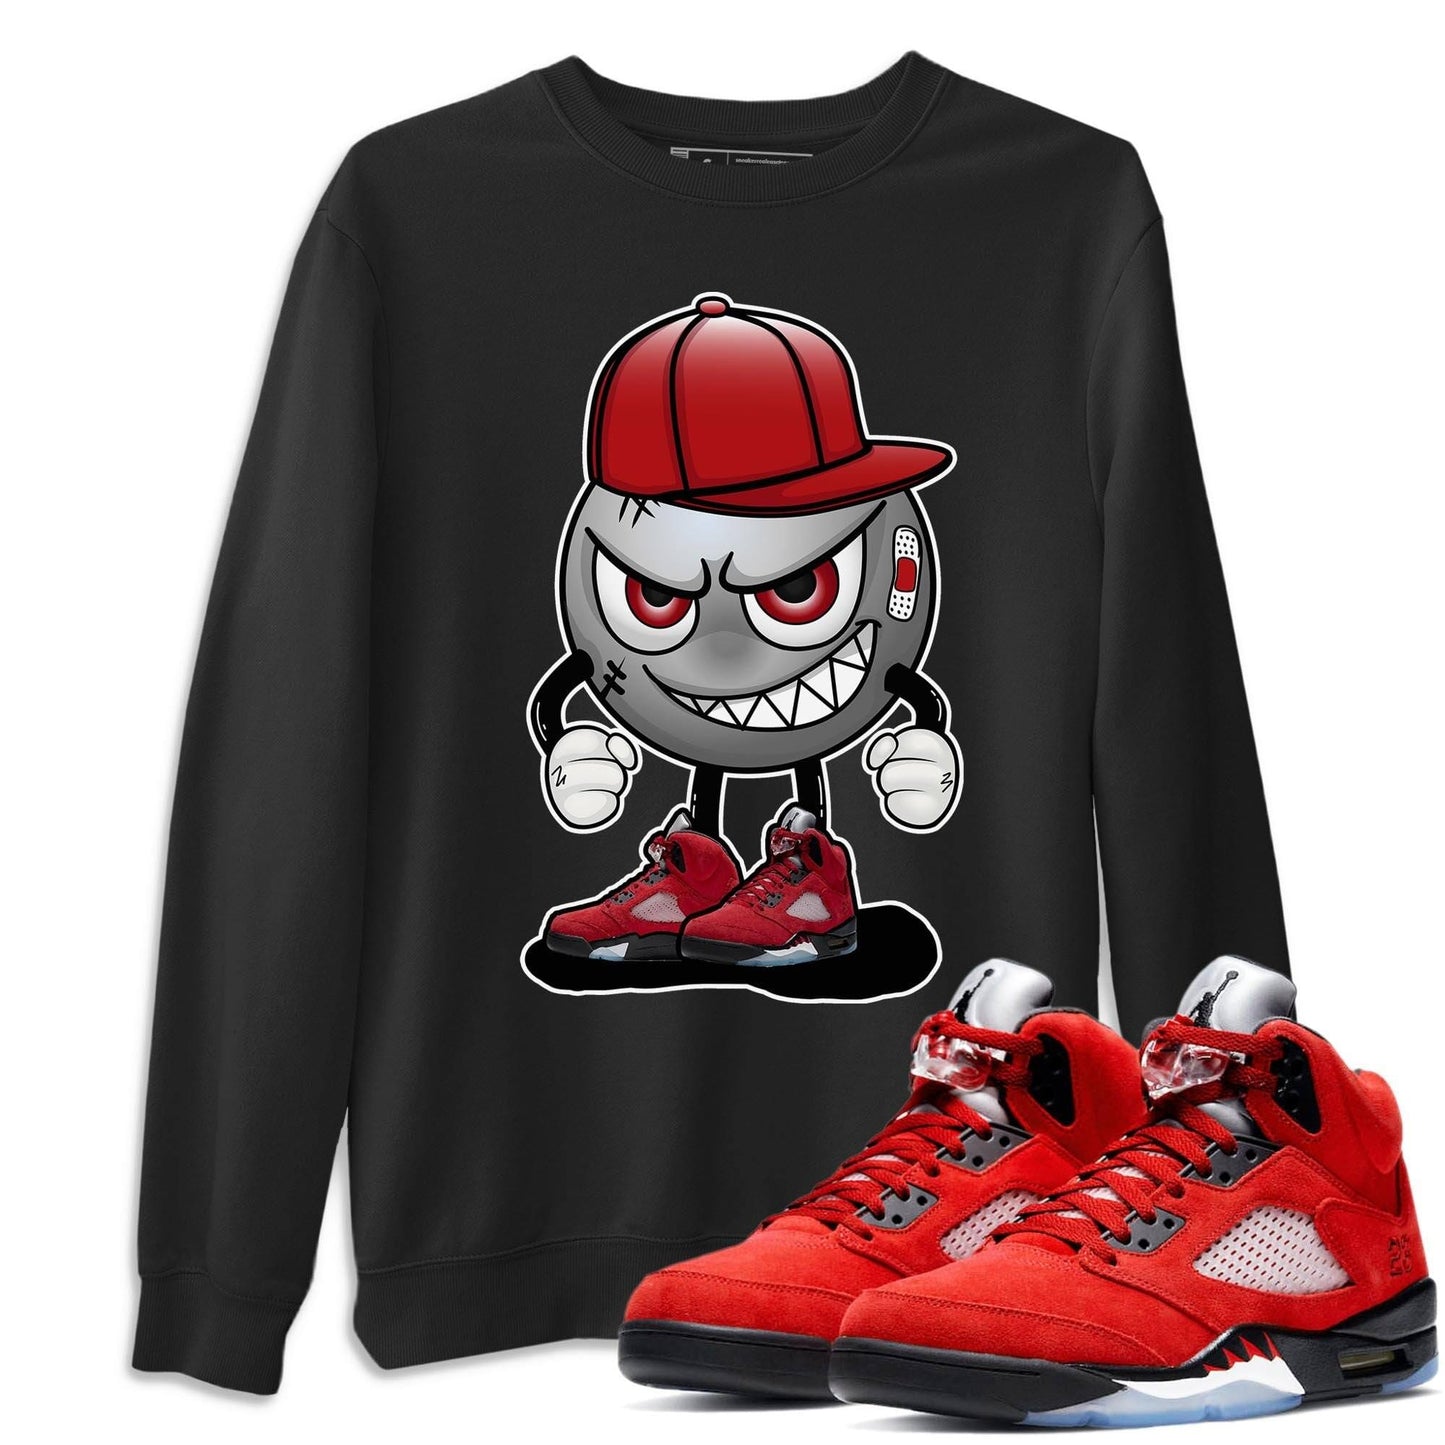 Jordan 5 Raging Bull Shirt To Match Jordans Mischief Emoji Sneaker Tees Jordan 5 Raging Bull Drip Gear Zone Sneaker Matching Clothing Unisex Shirts